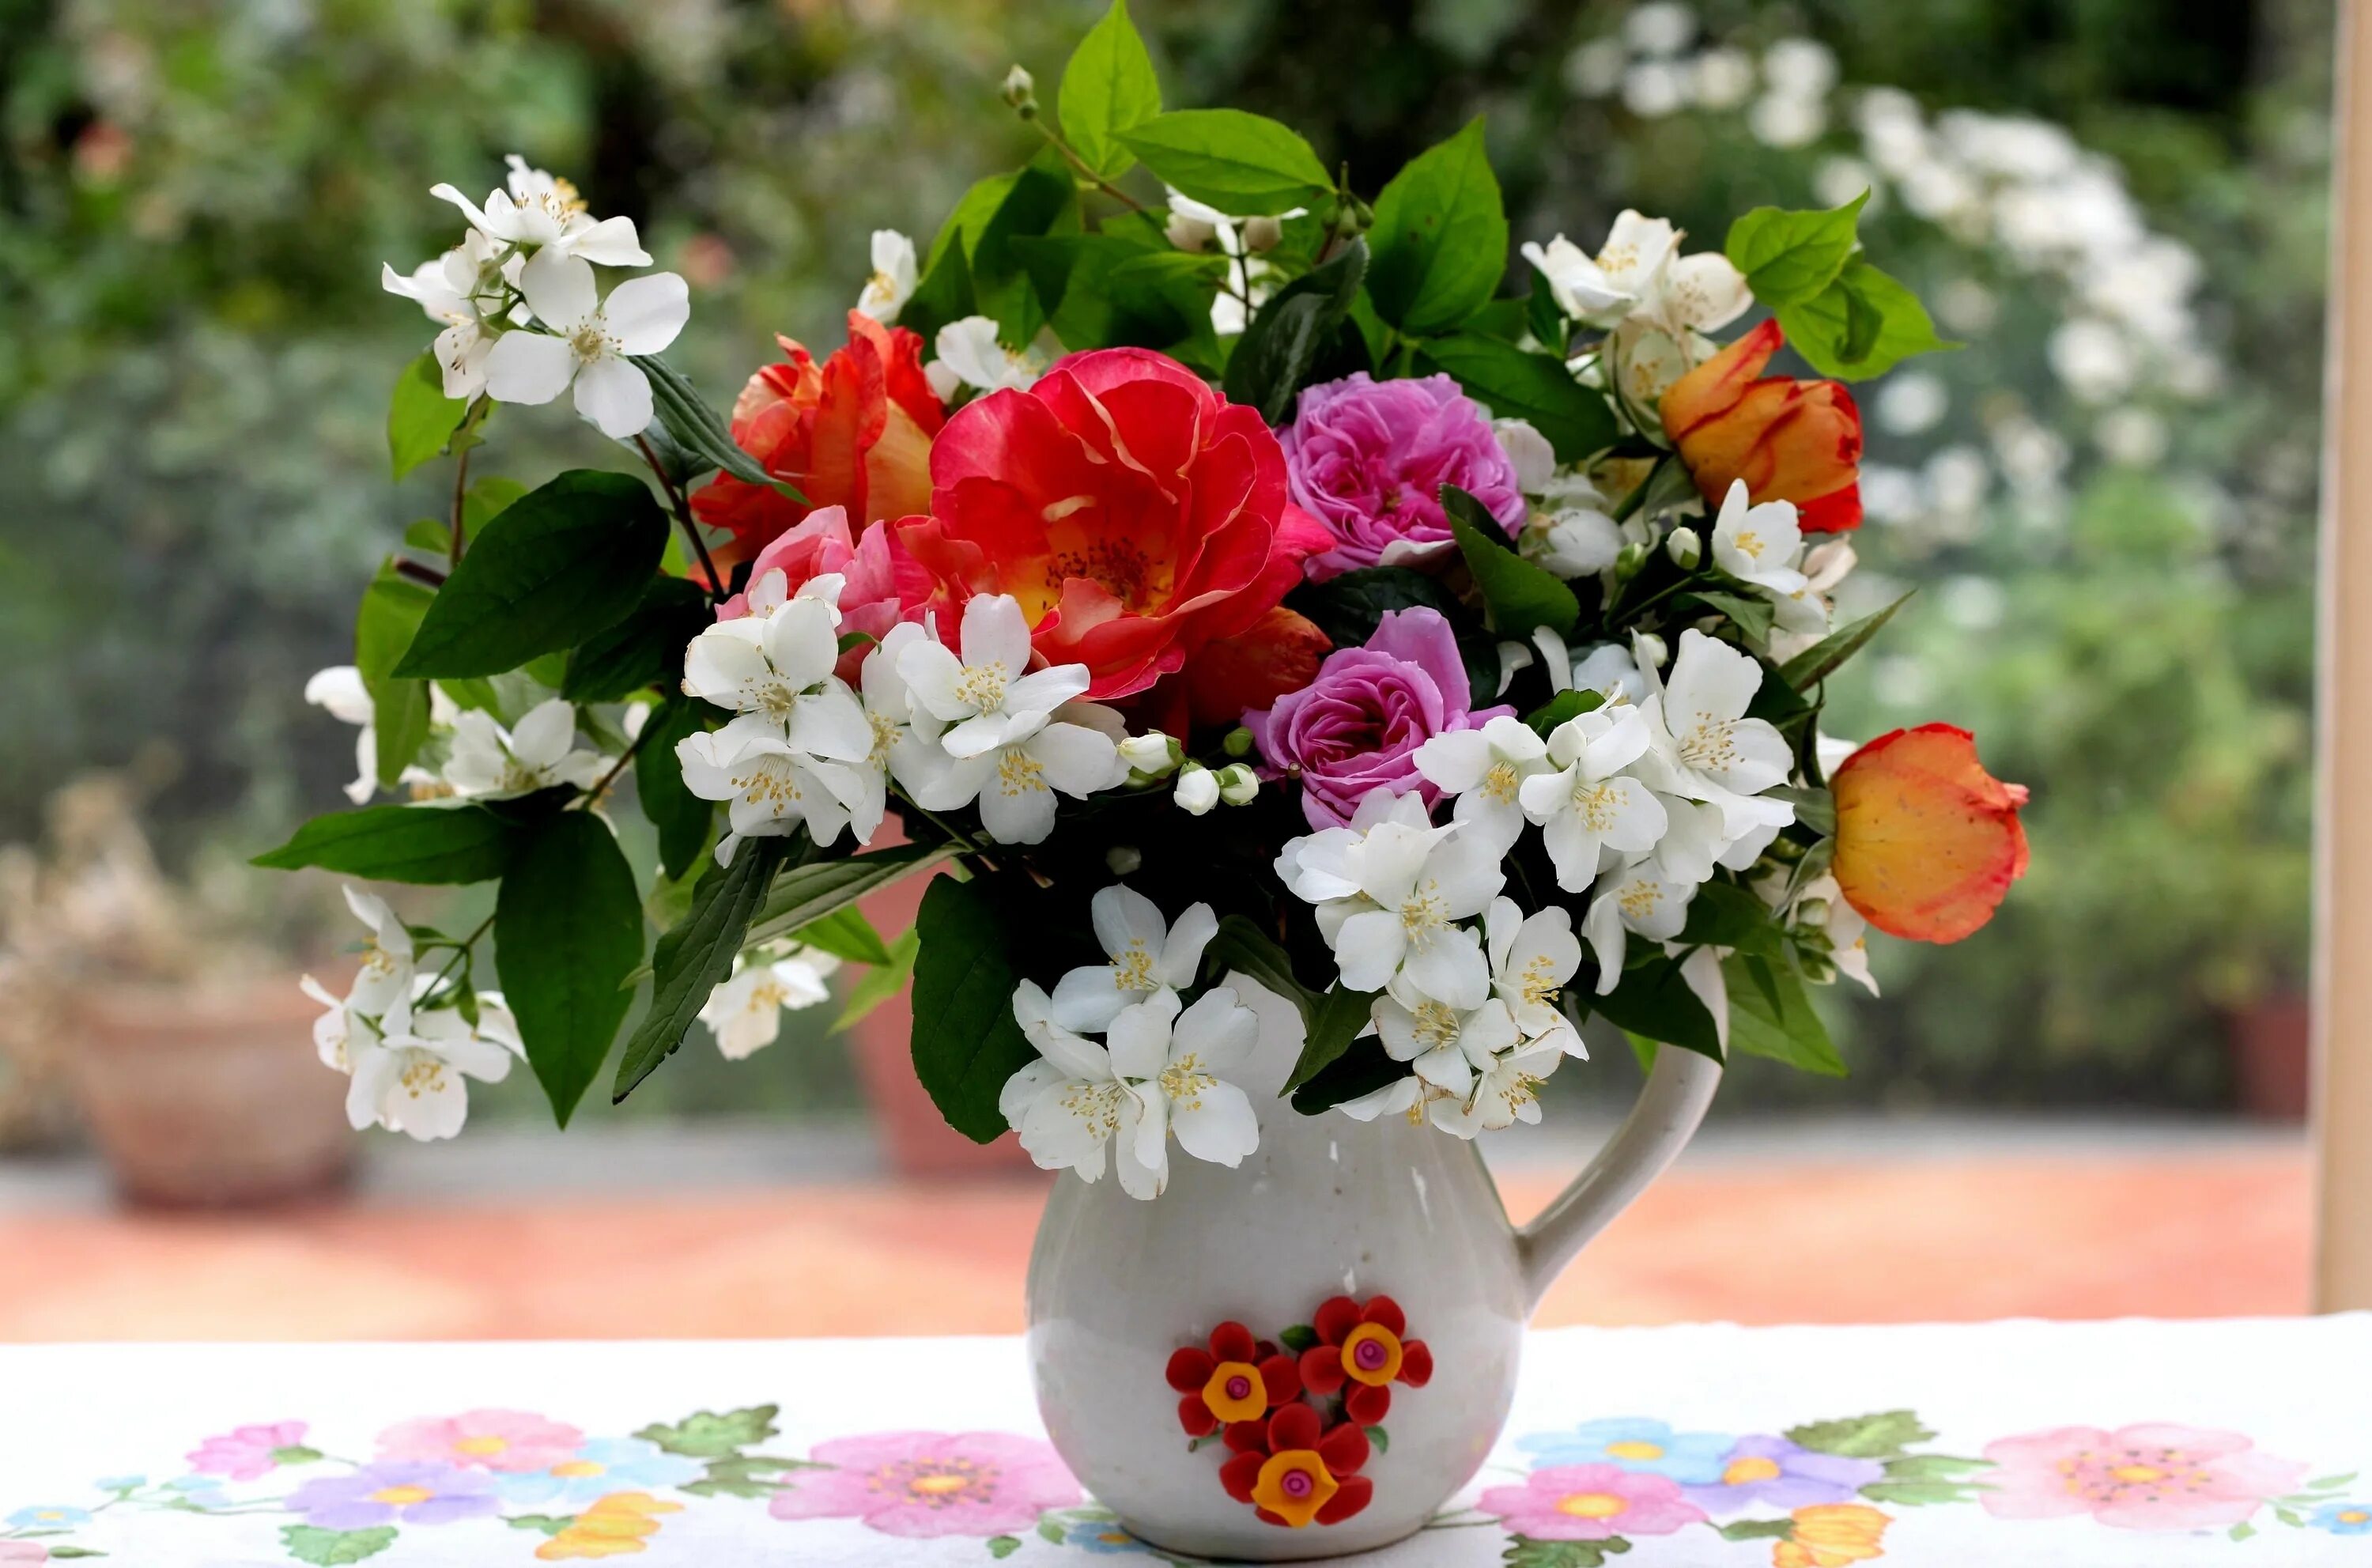 Картинка добрый цветок. Жасмин цветок букет. Цветы в вазе. Шикарные цветы. Красивый букет цветов в вазе.